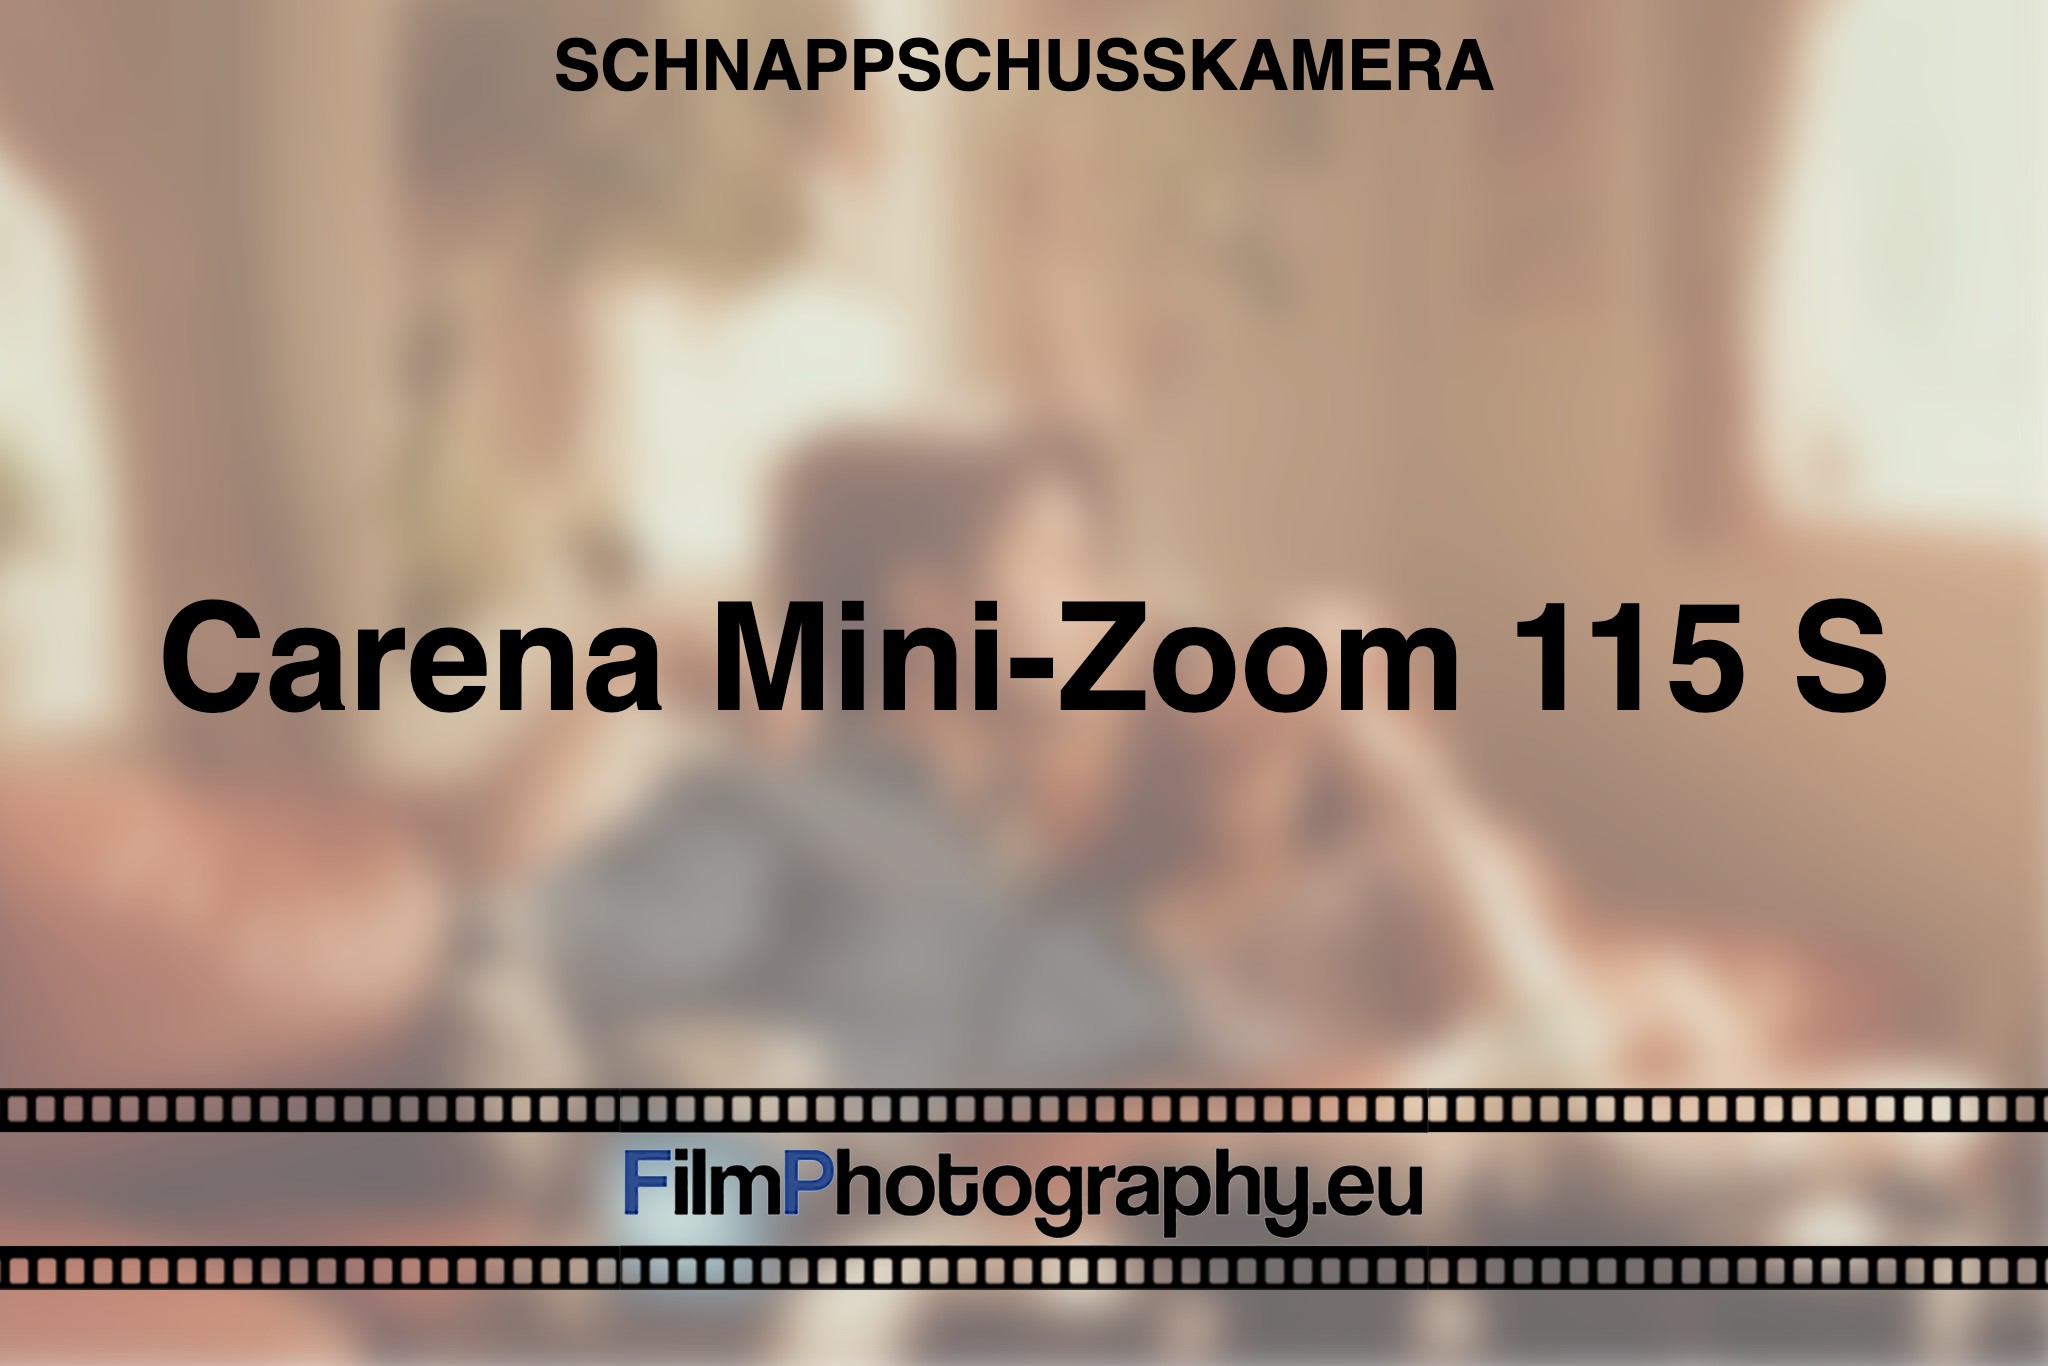 carena-mini-zoom-115-s-schnappschusskamera-bnv